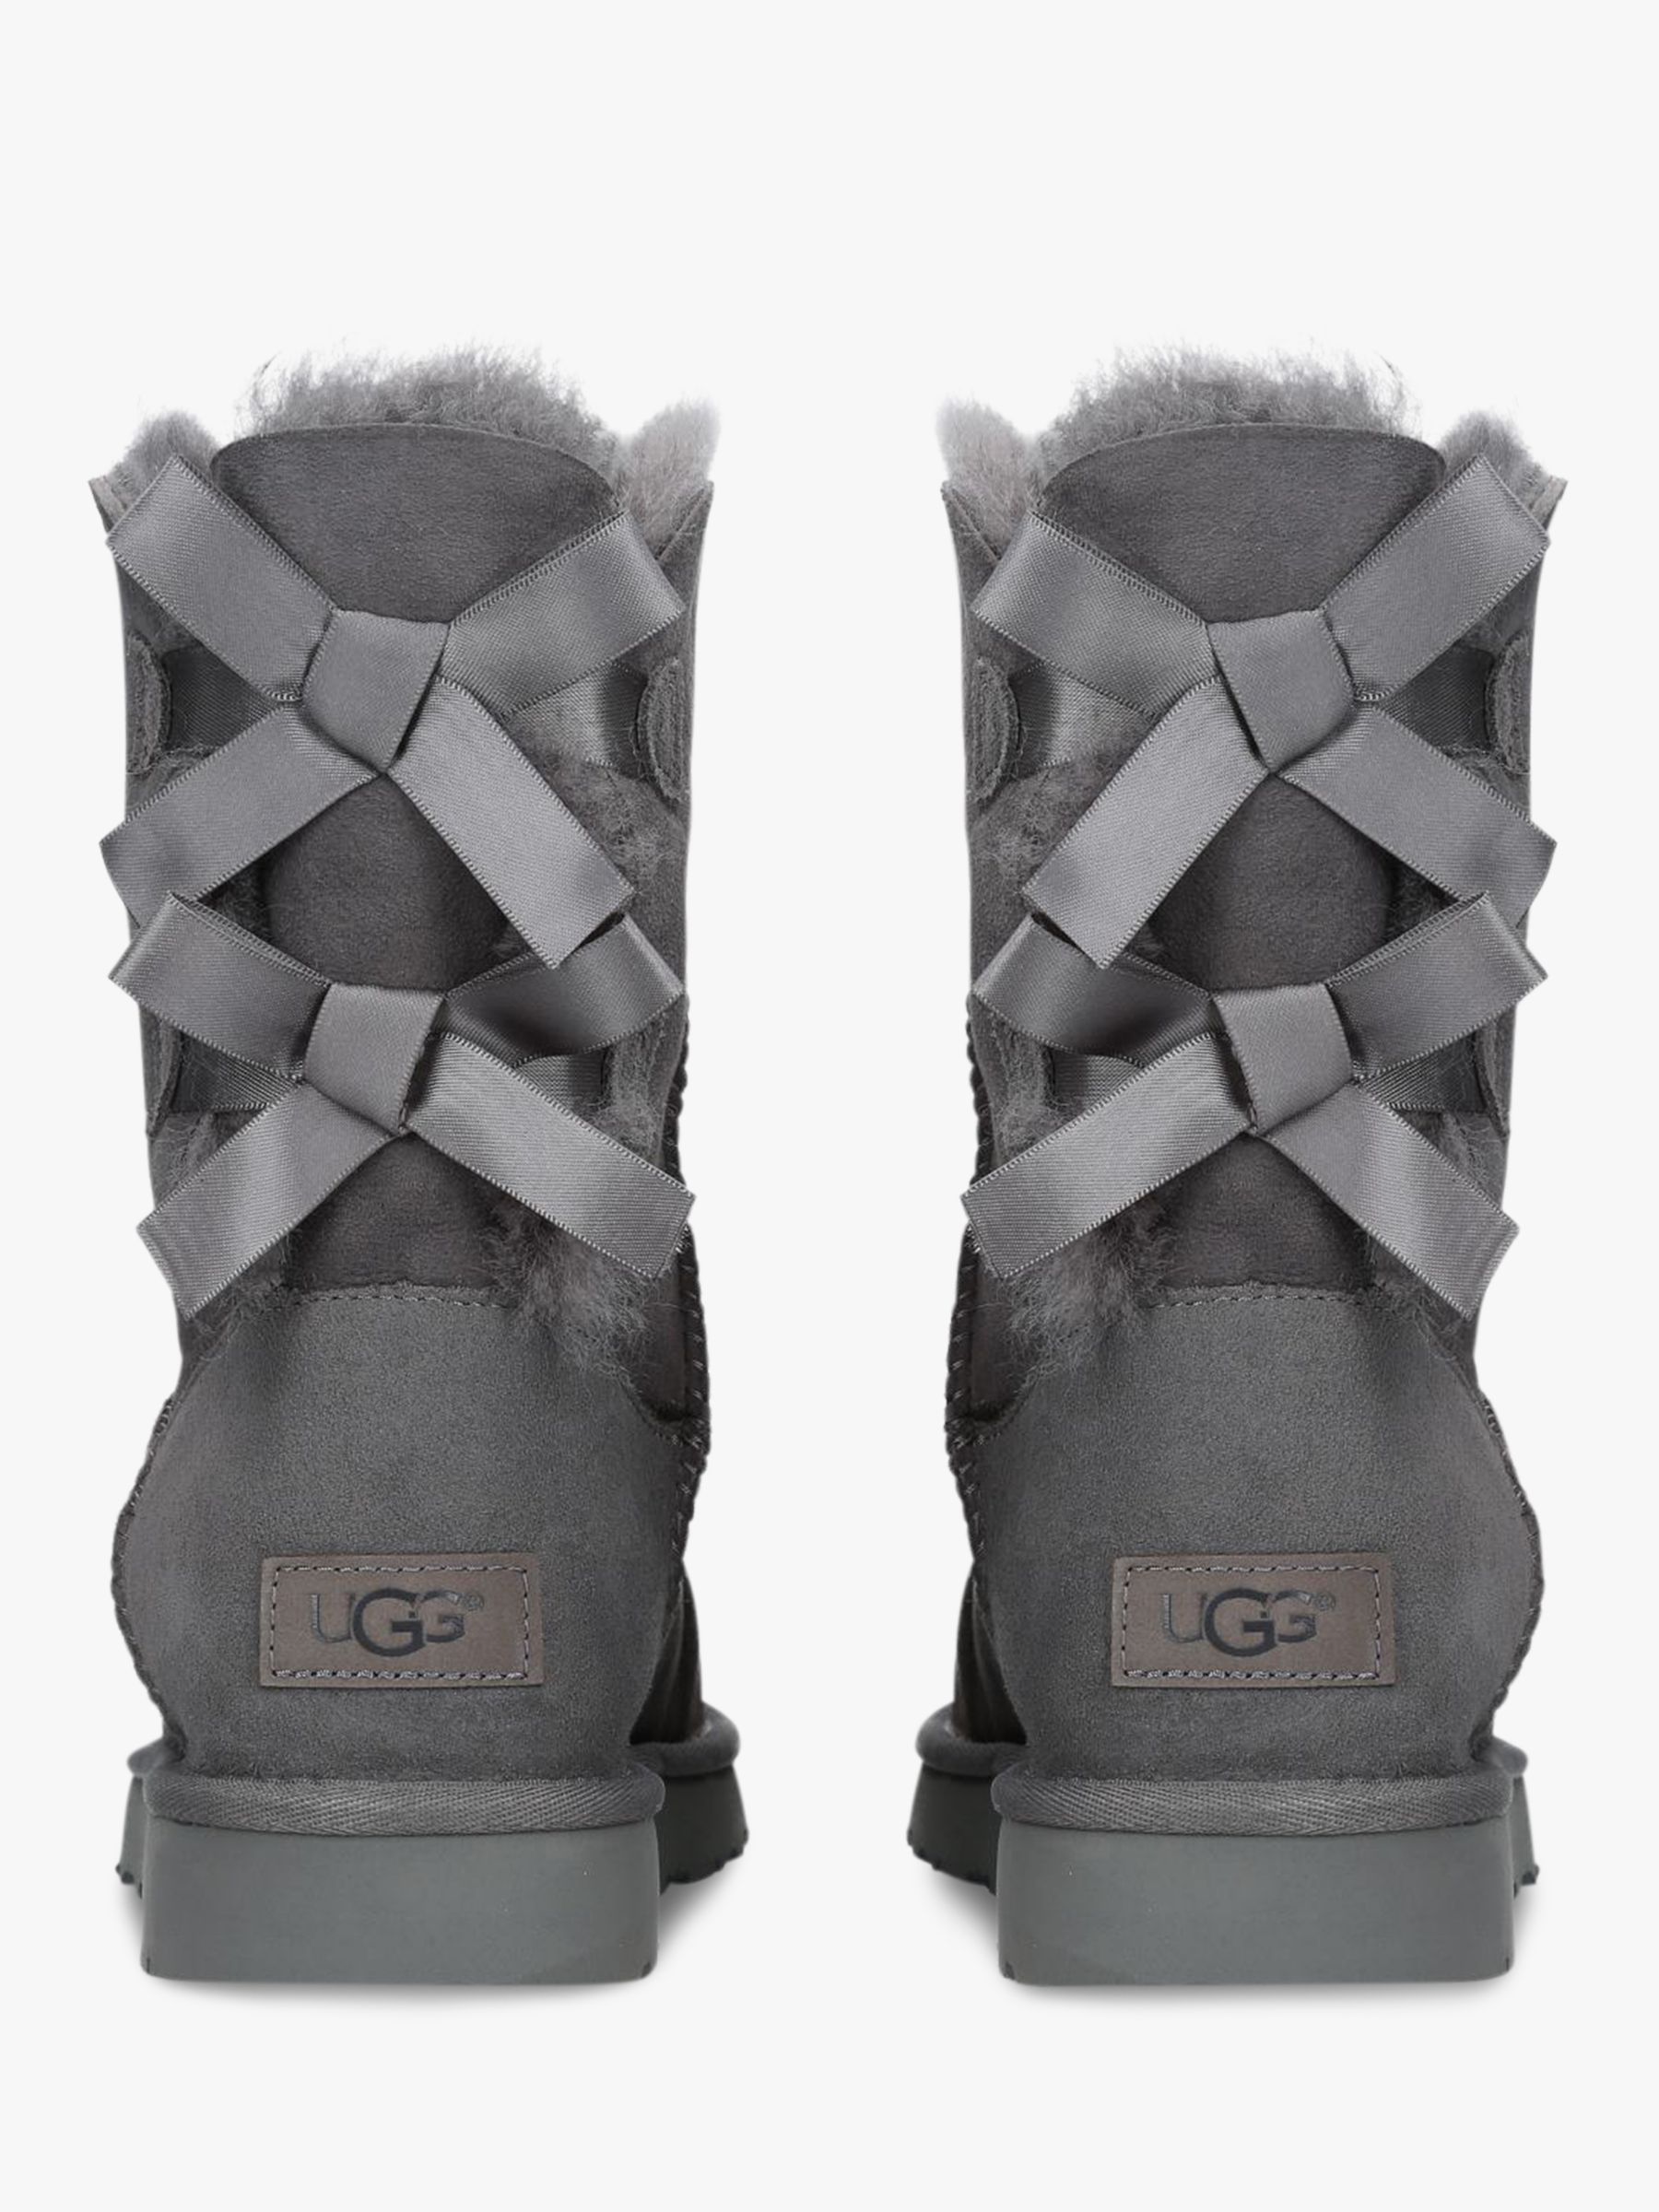 ugg grey suede boots